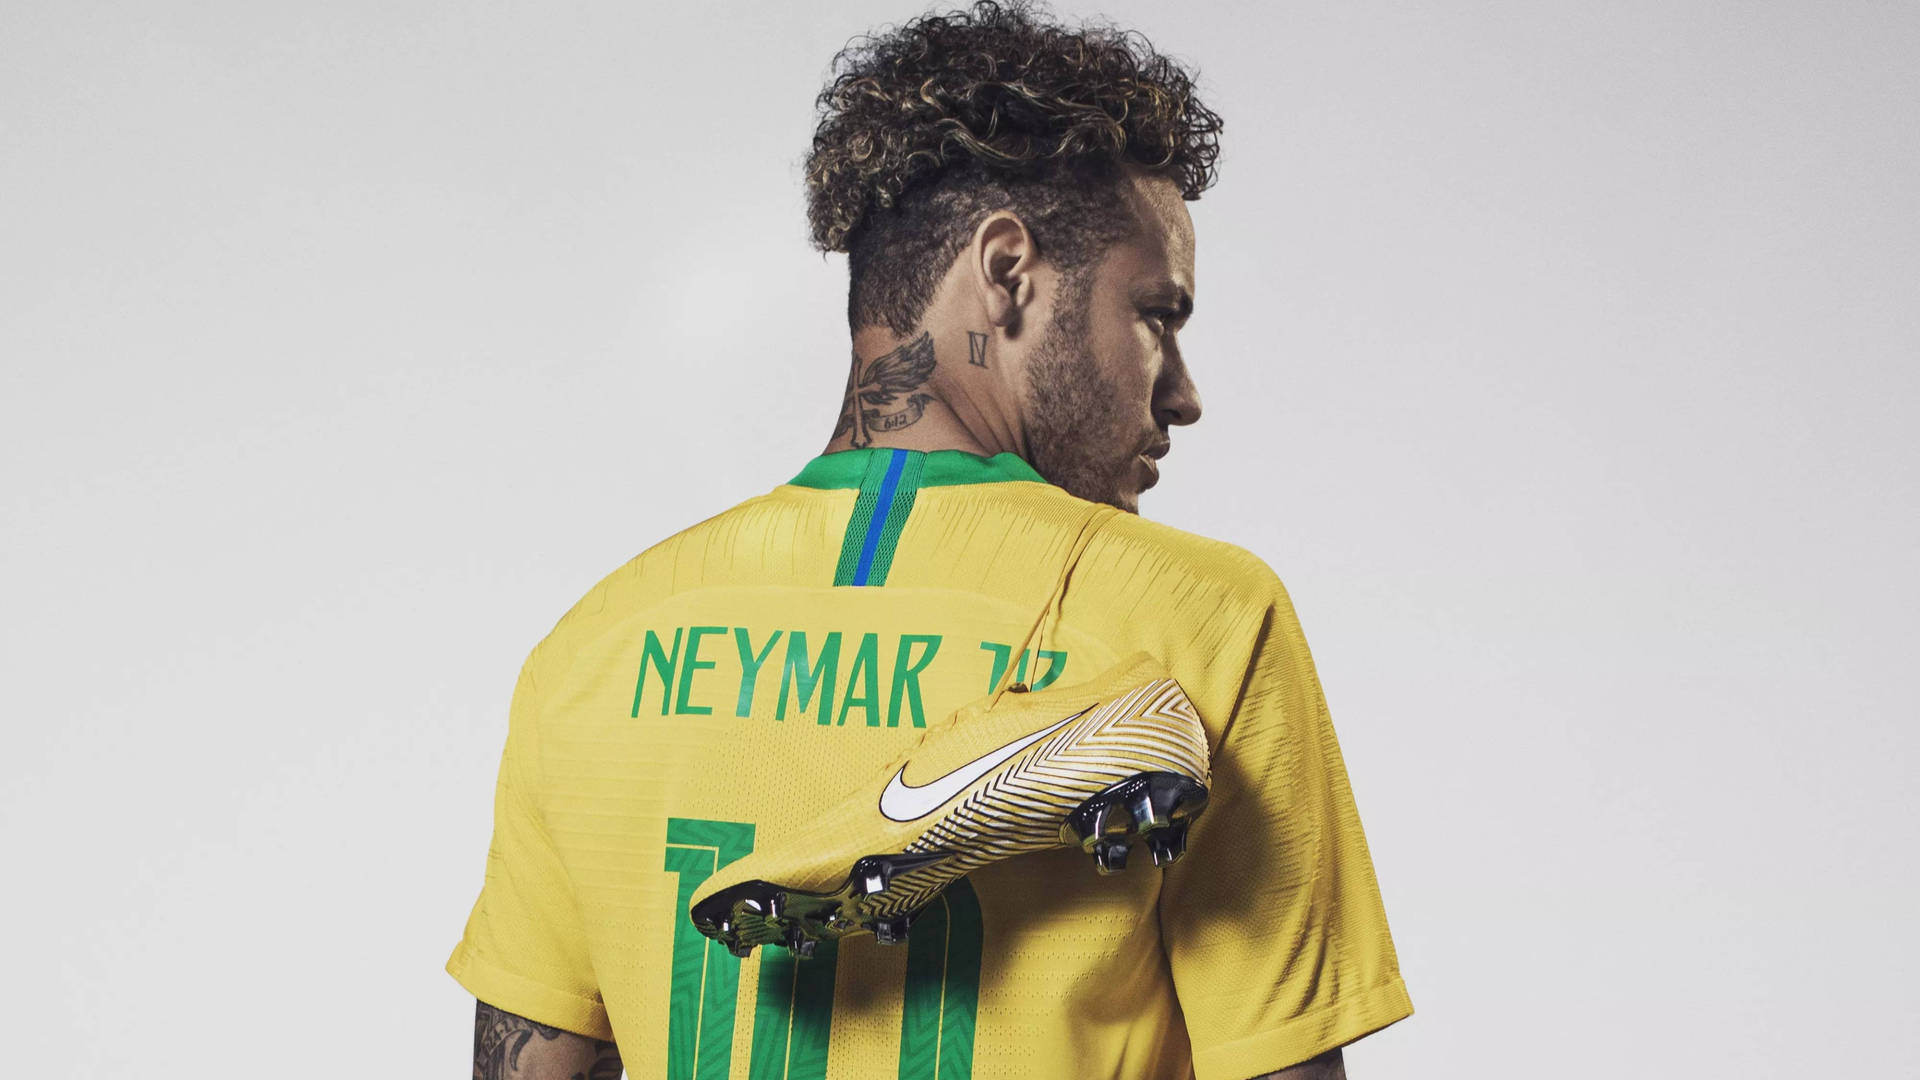 Gulnike-sko Neymar 4k. Wallpaper